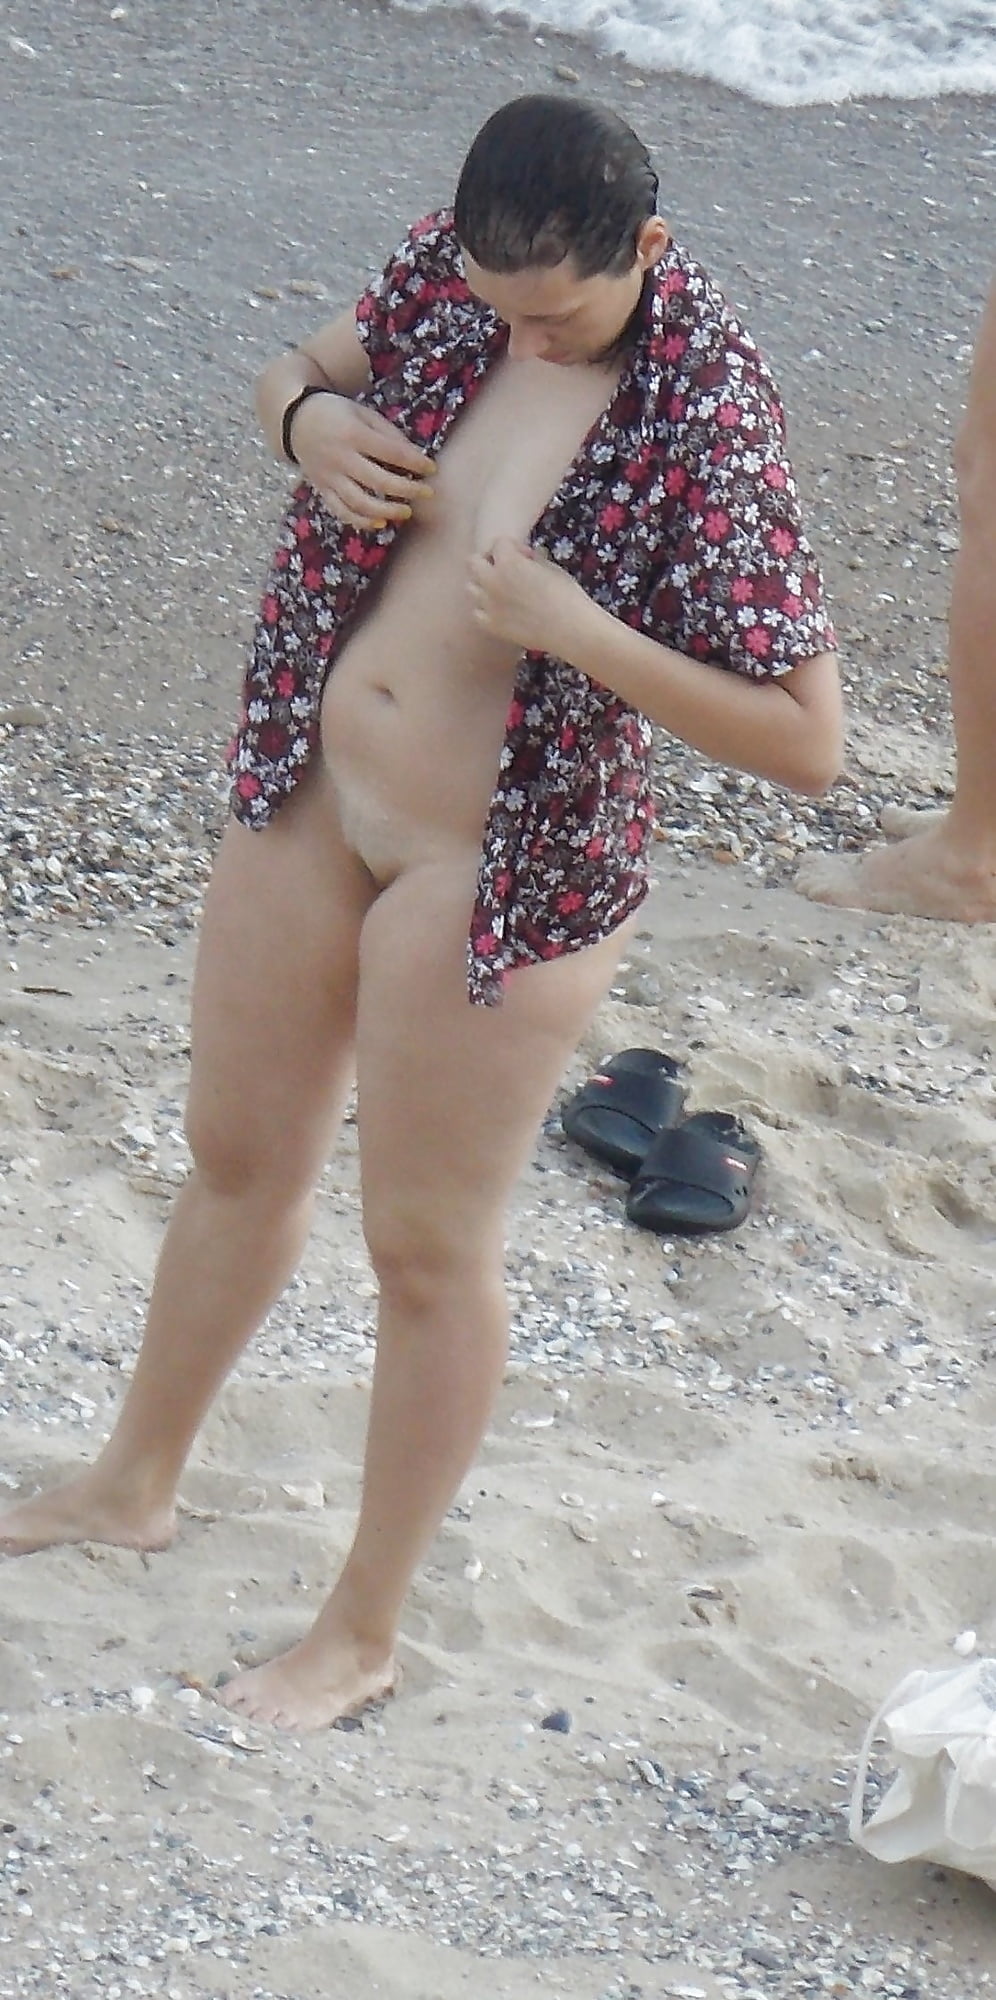 Nudist beach. 2 women. Odessa, Ukraine (8/33)